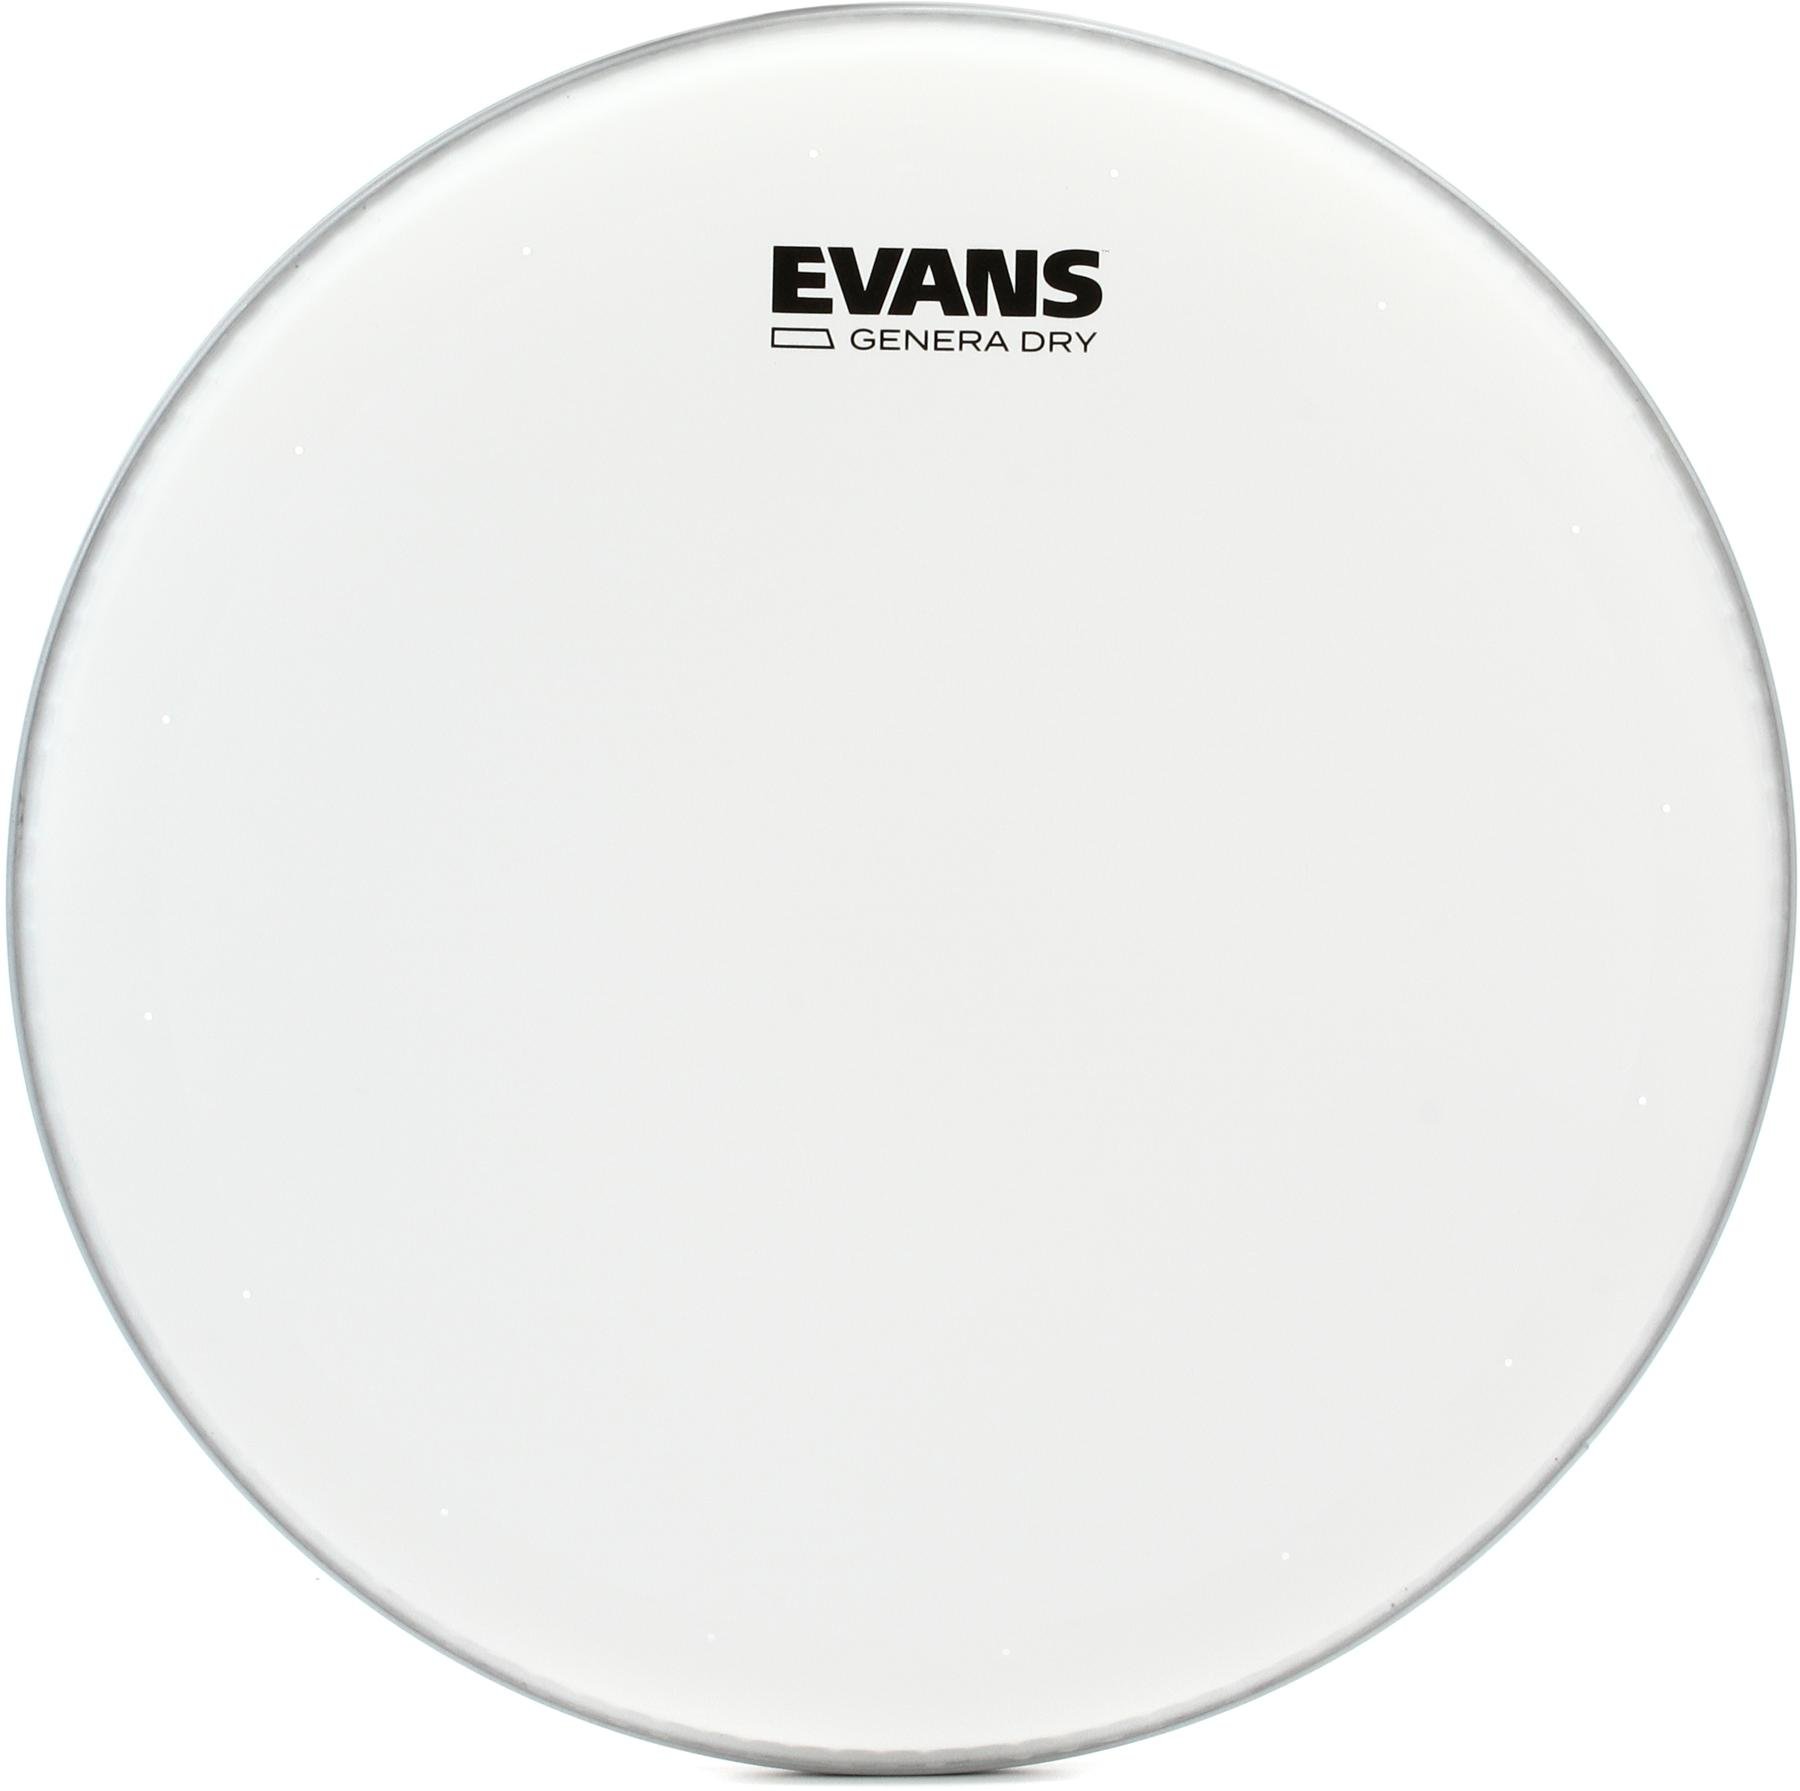 Evans Genera Dry Snare Head - 13 inch 